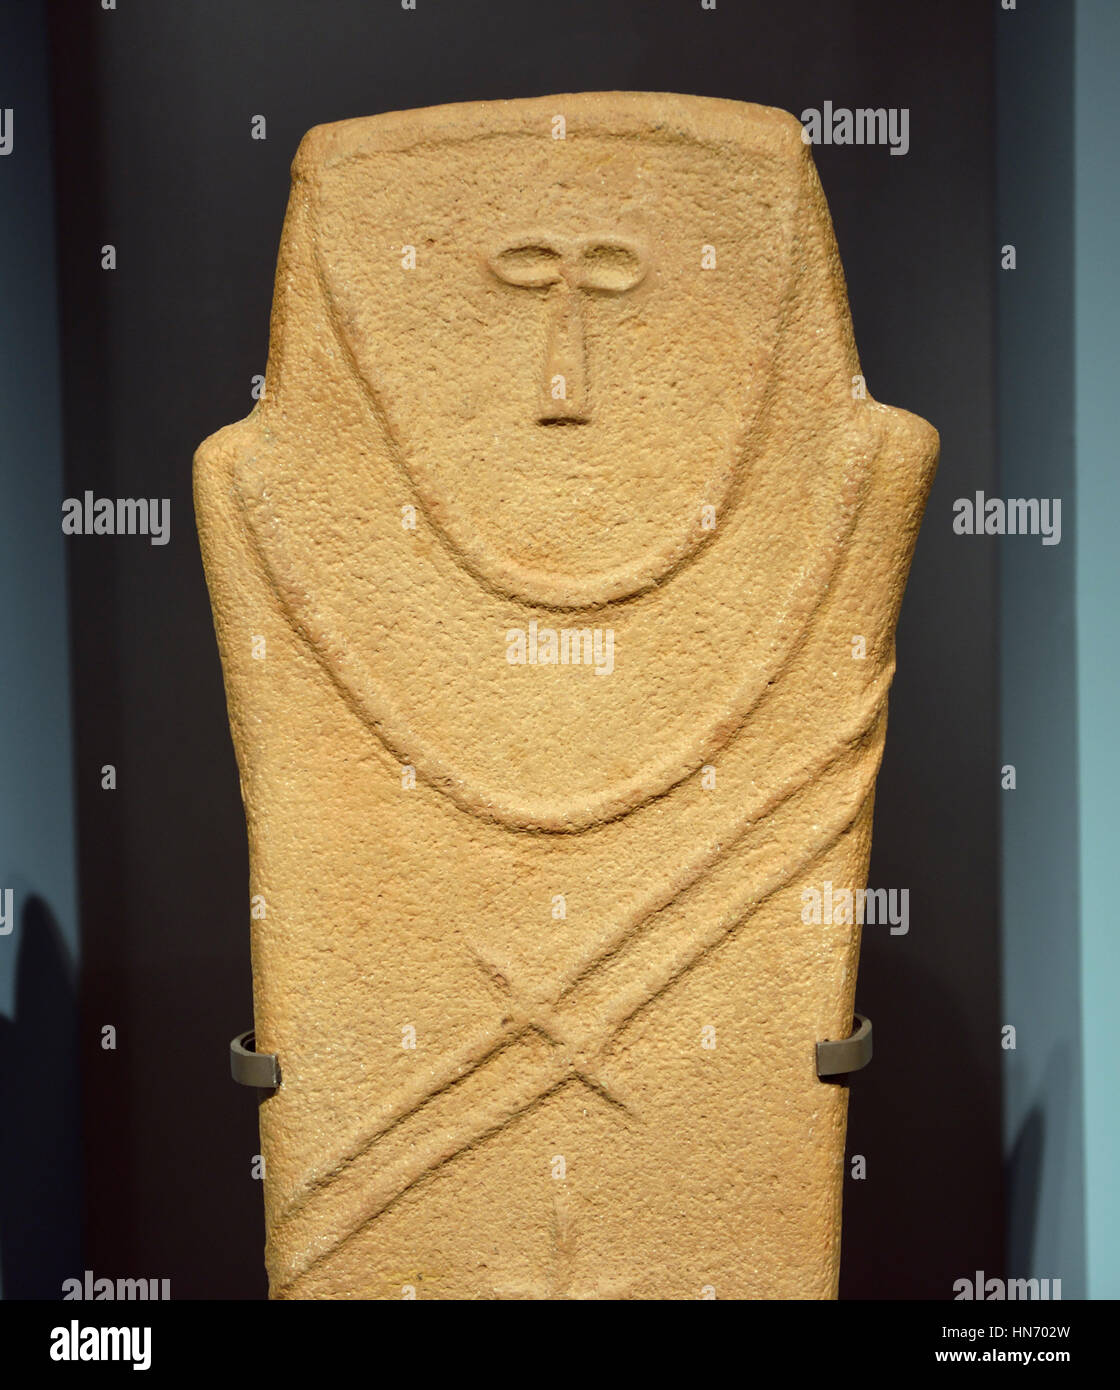 Anthropomorphic stele   Qaryal al-Kaafa, near Ha'il   4th millennium BCE   Sandstone   National Museum, Riyadh Stock Photo